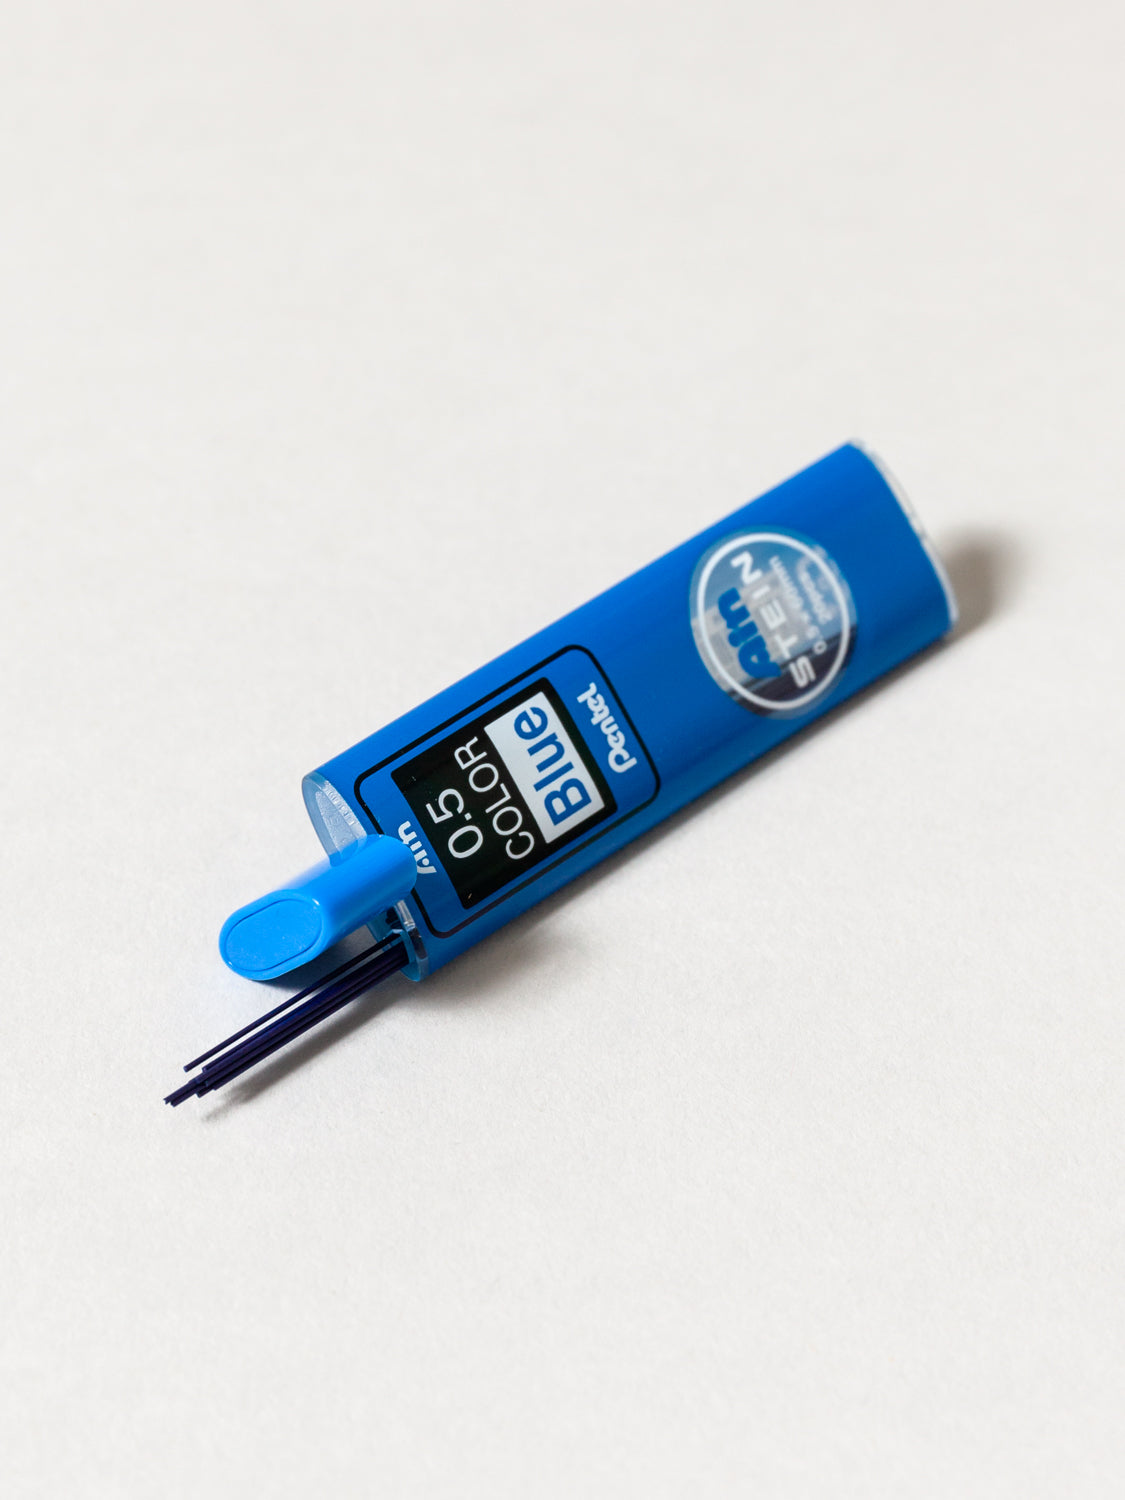 Pentel Ain STEIN 0.5mm Mechanical Pencil Lead - Colors